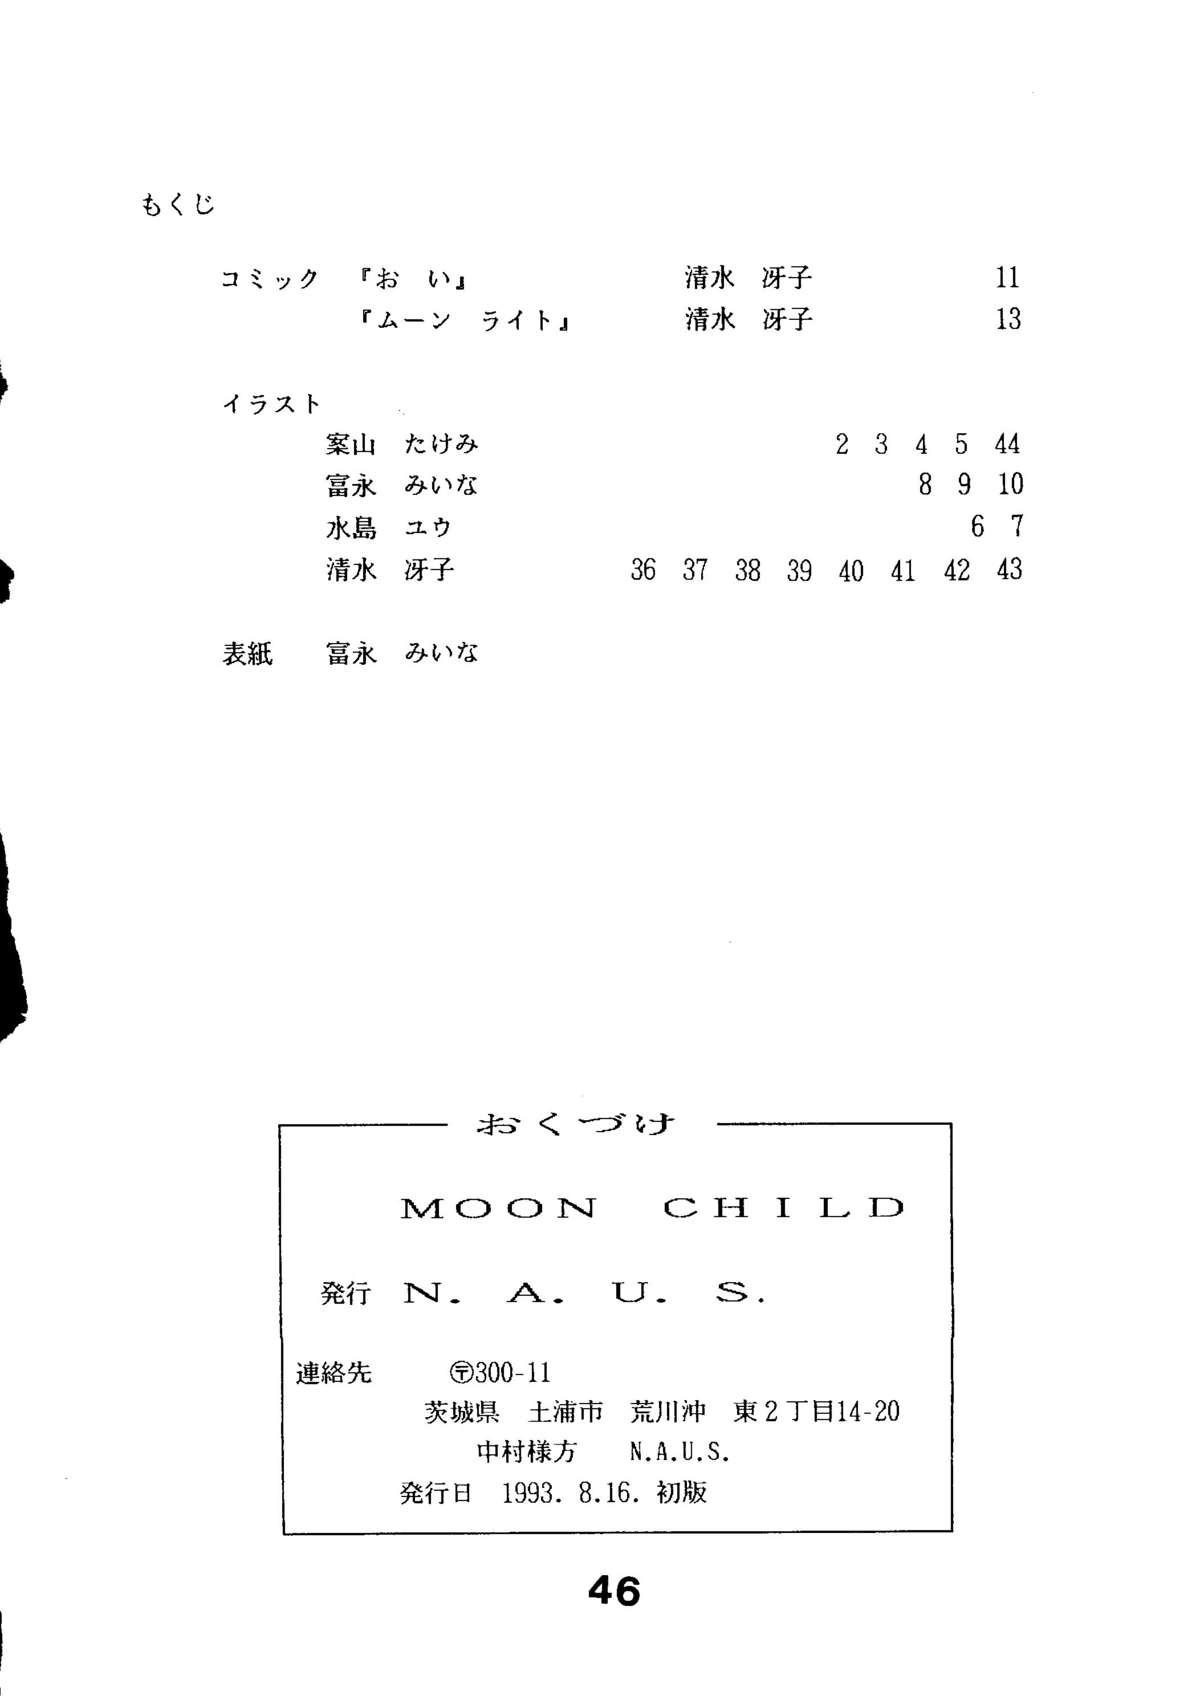 Moon Child 47